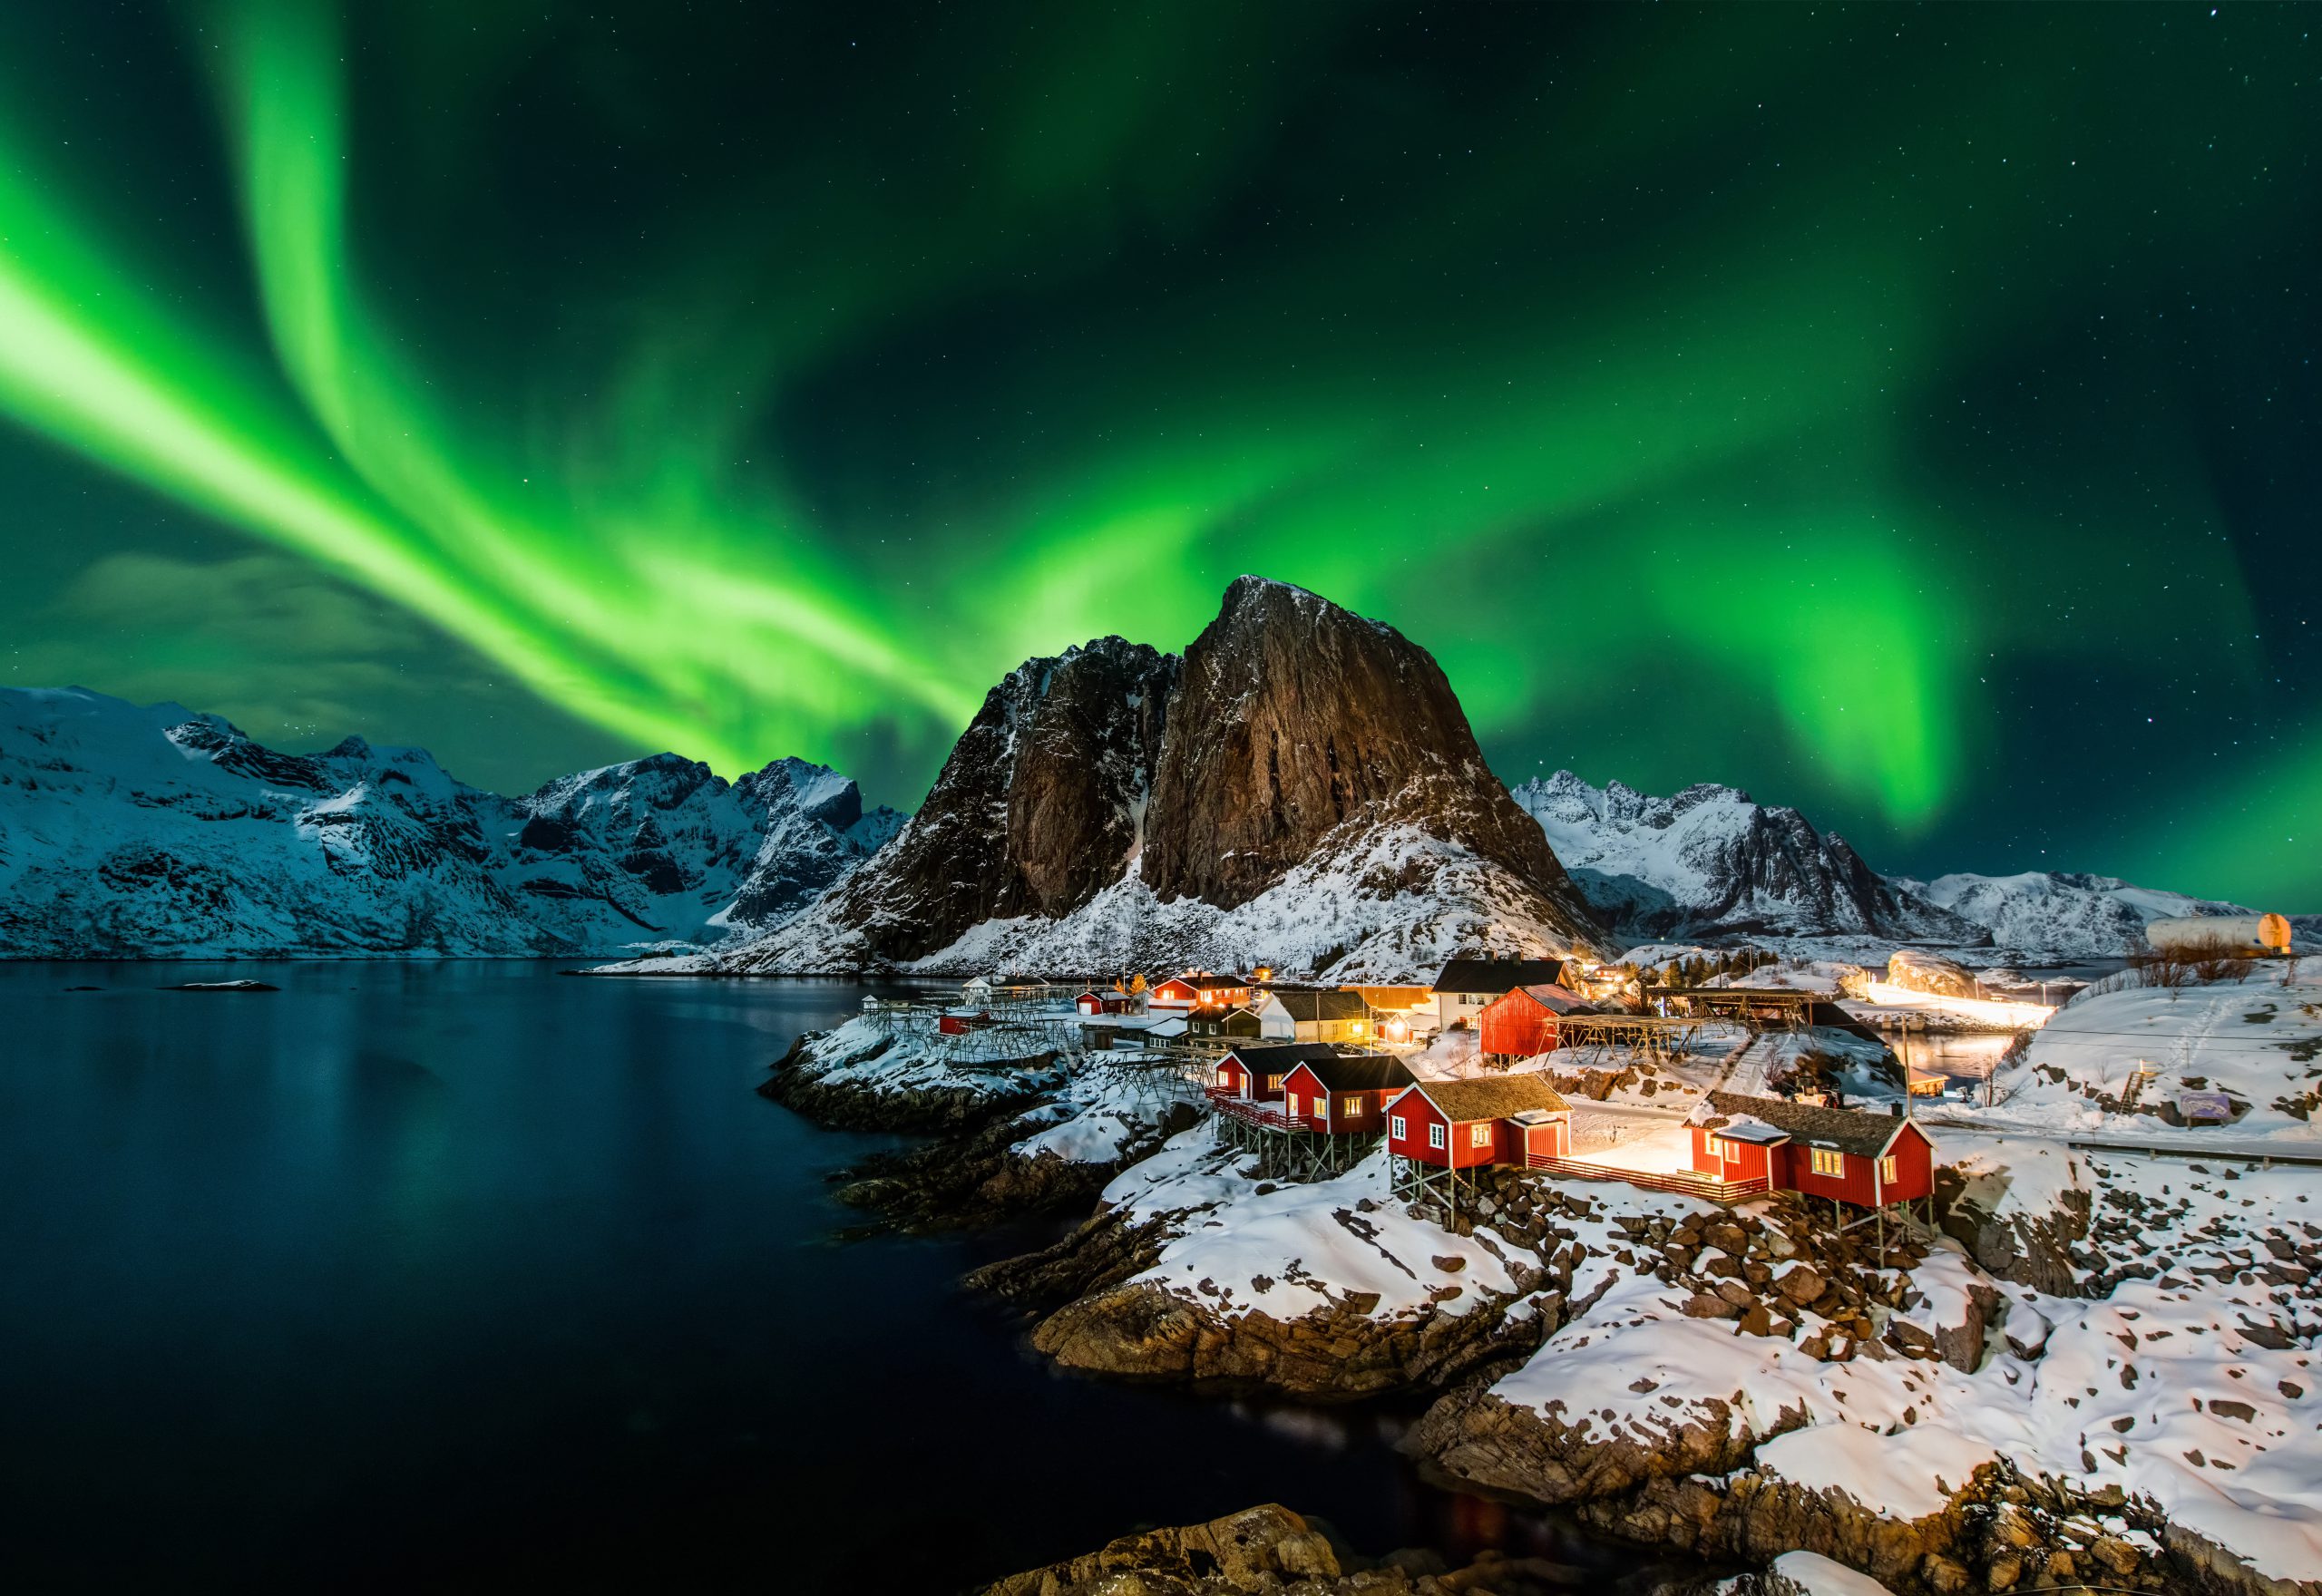 Book now - ending soon $1400 onboard credit on Hurtigruten Norwegian Coast Express best seller